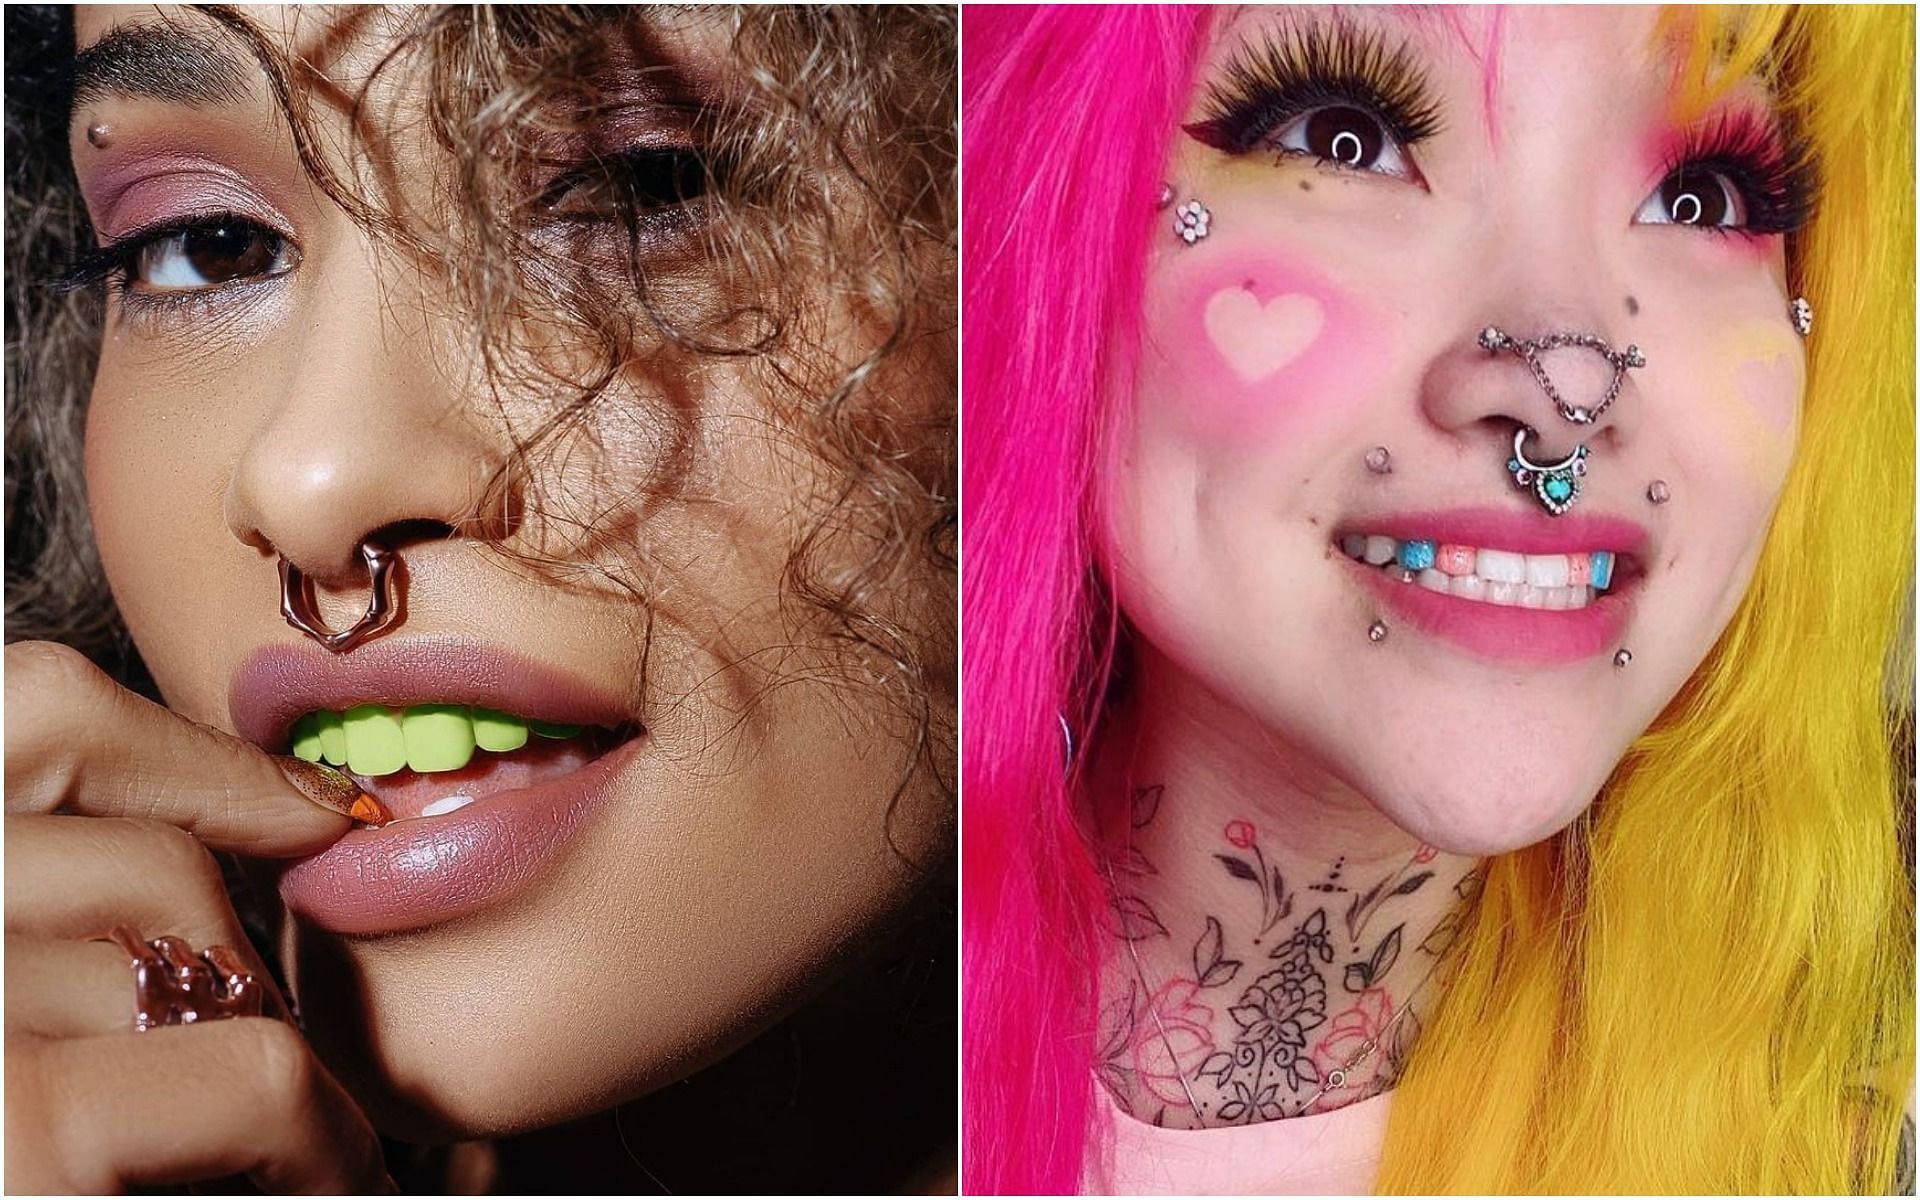 Chrom tooth polish is the latest trend taking over TikTok (Image via chromtoothpolish/Instagram)